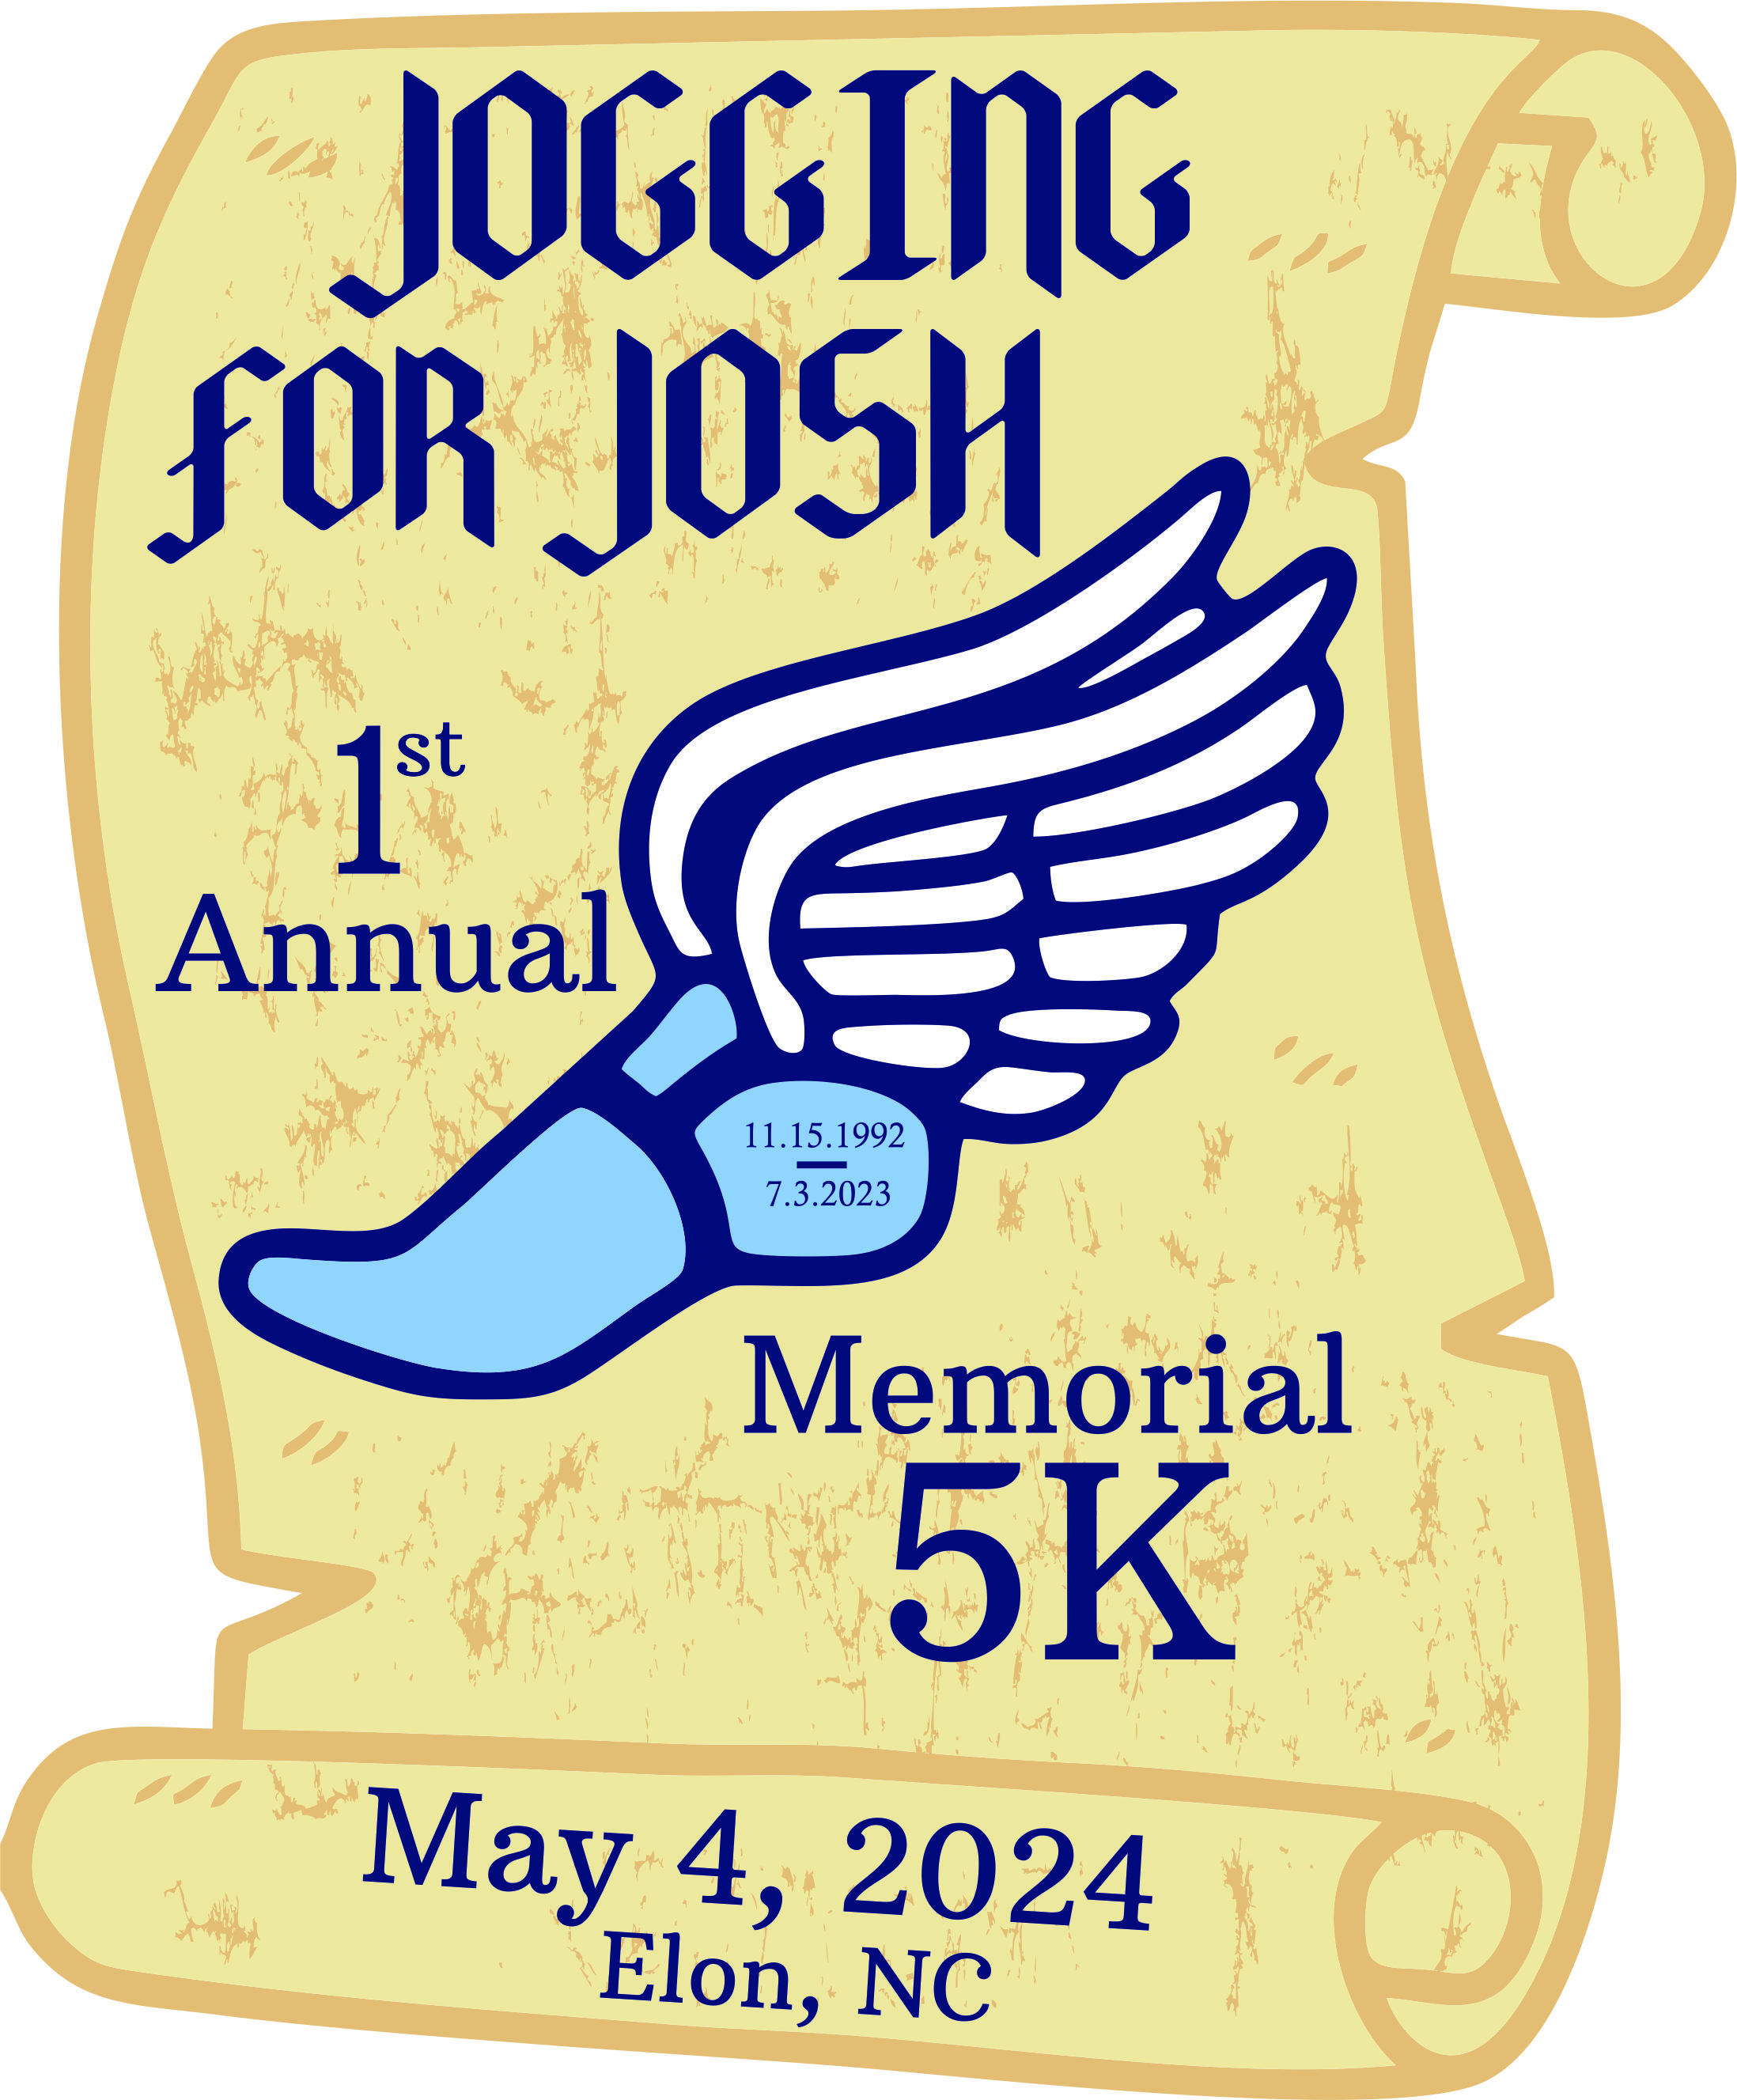 Jogging for Josh 5K